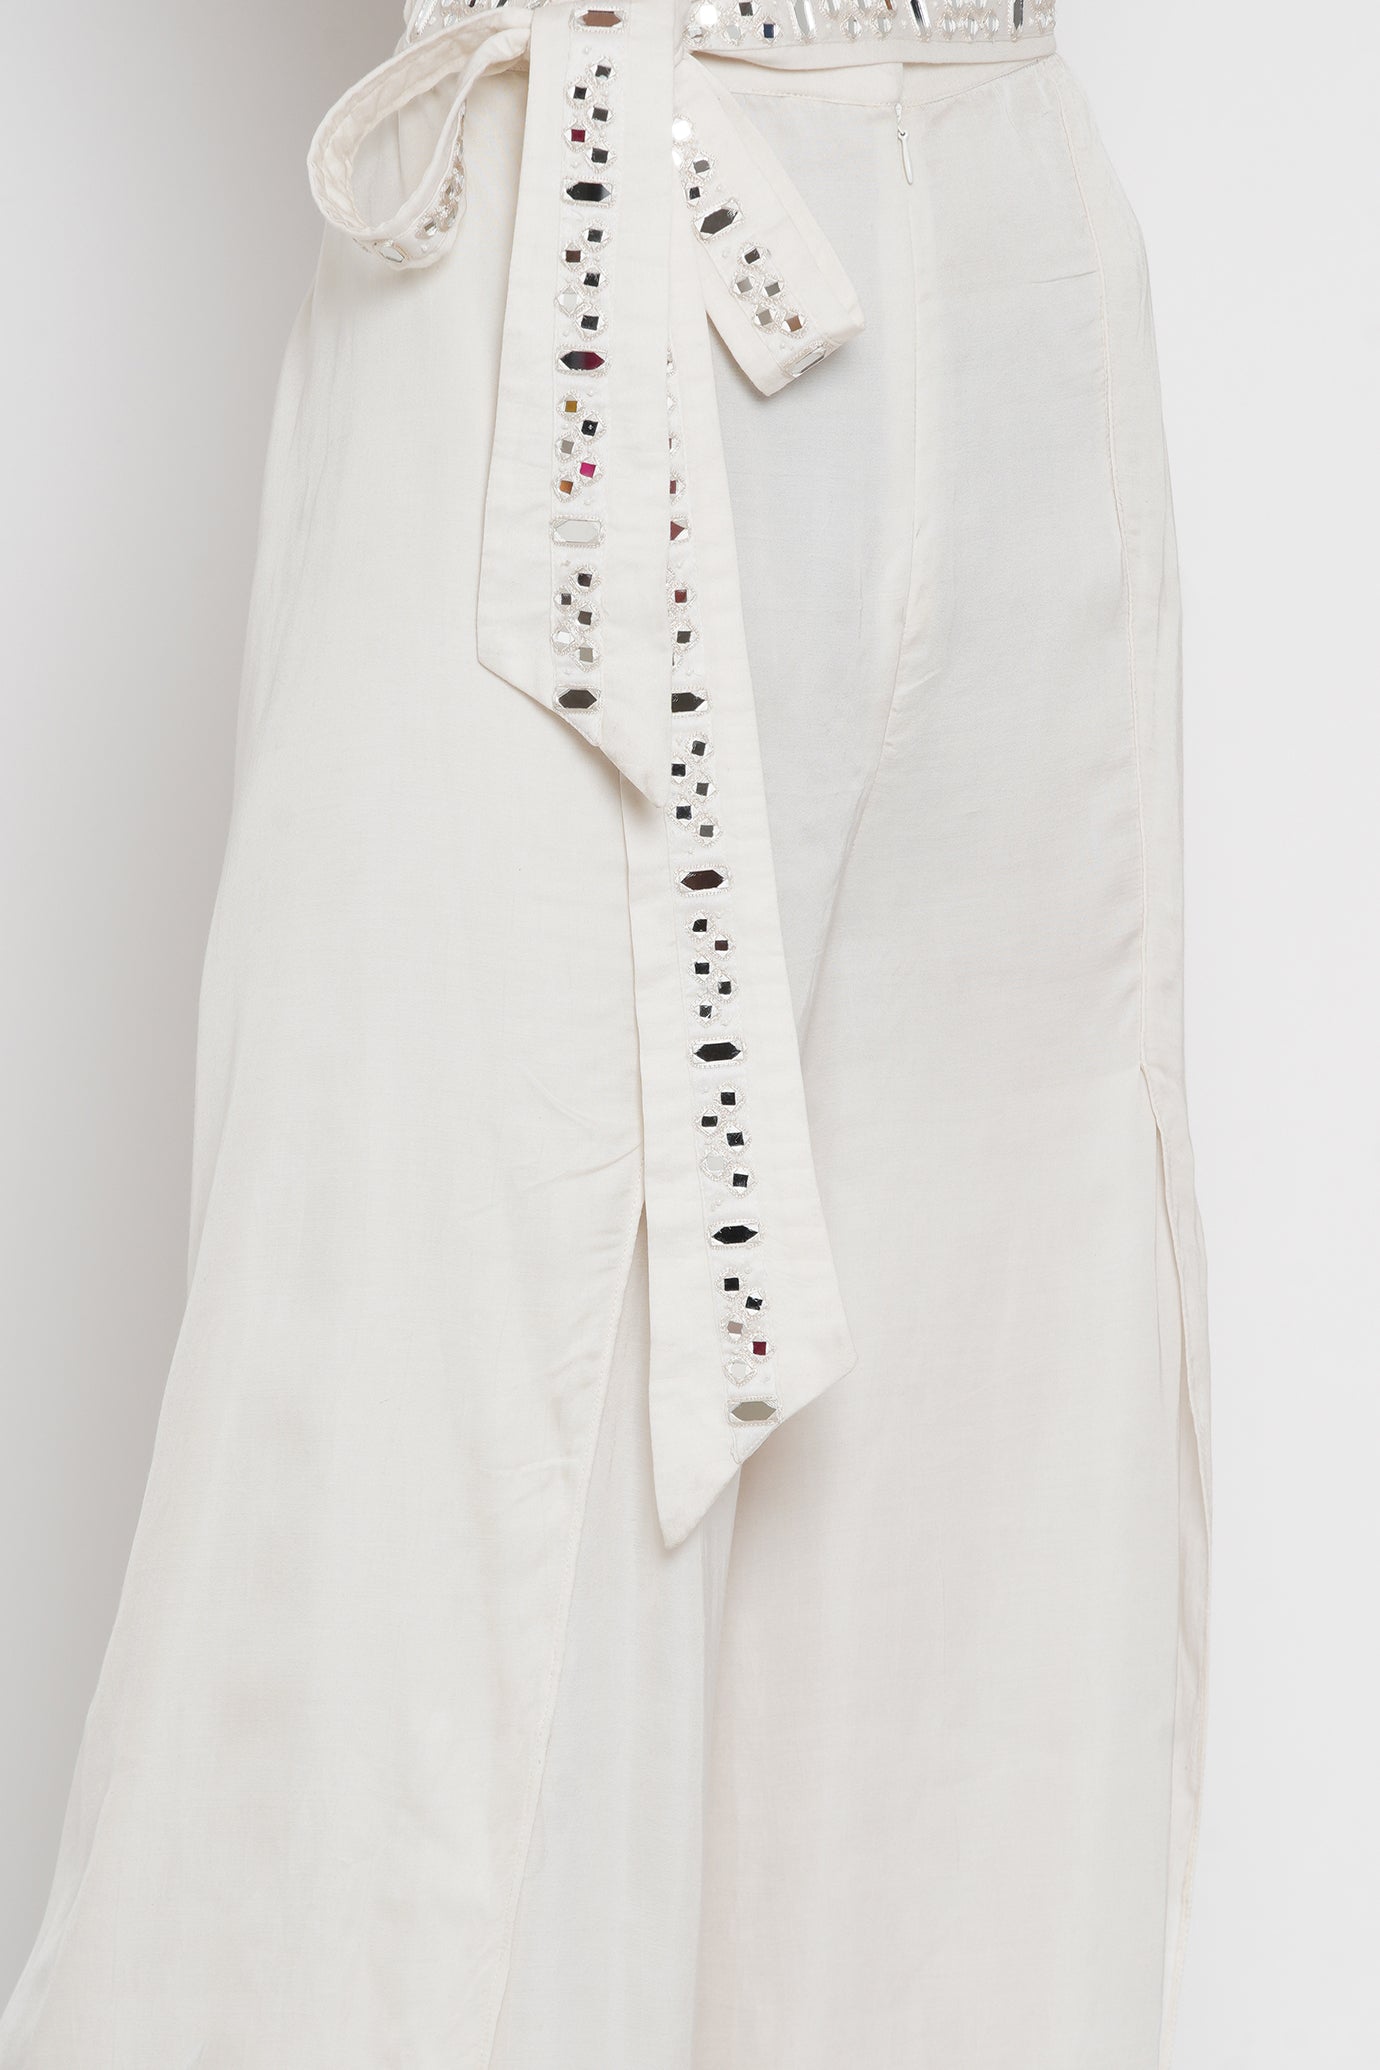 Off-White Slit Pants With Mirrorwork Belt